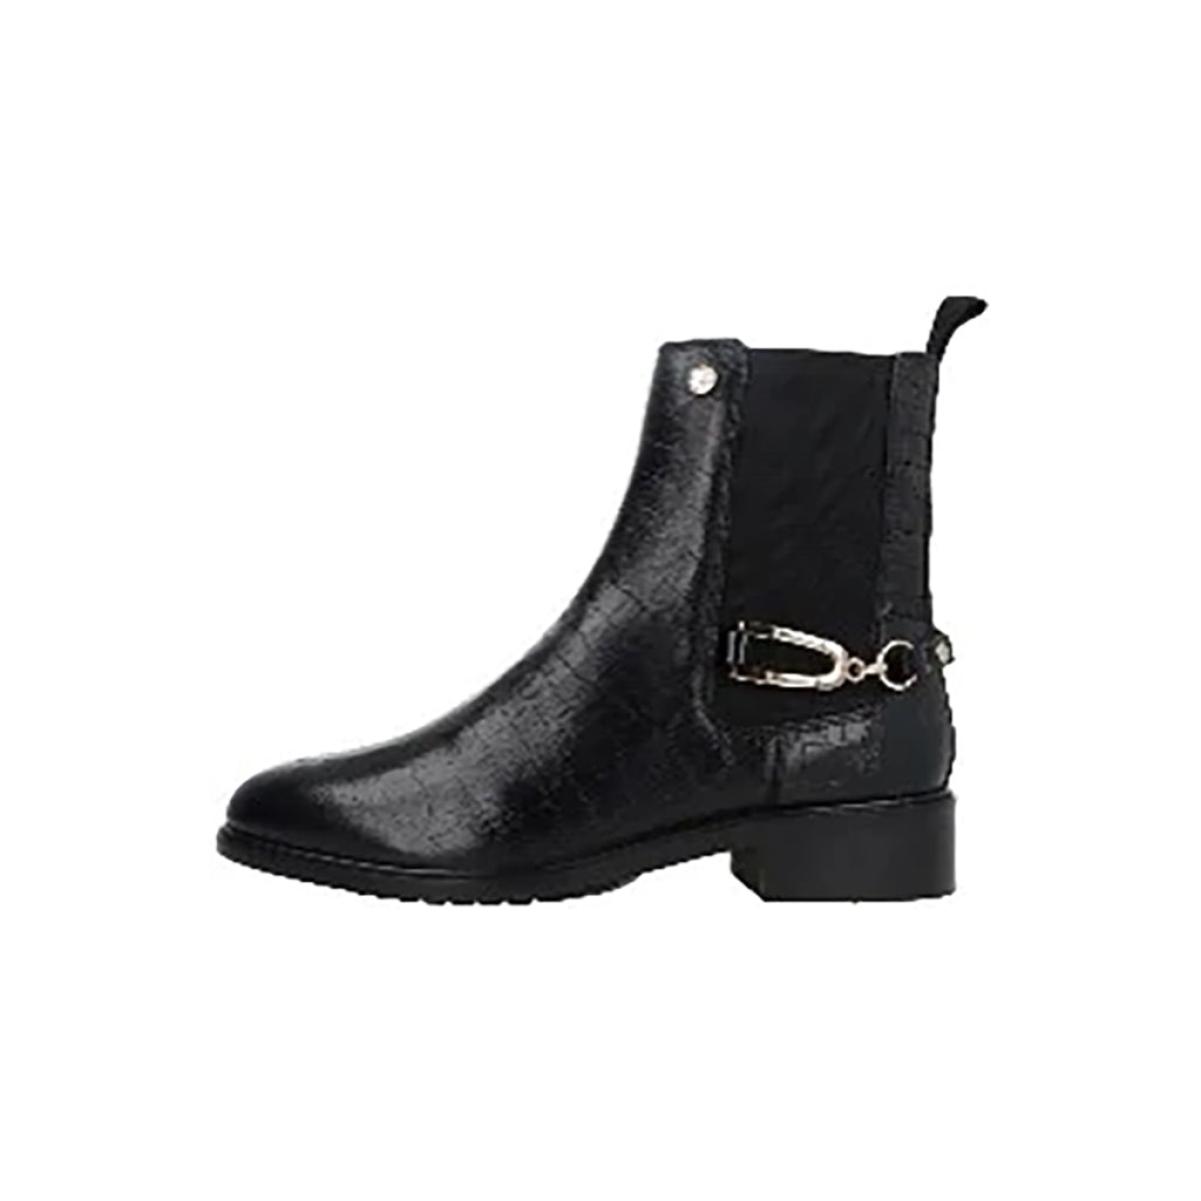 Copenhagen Shoes Intuitive Ankle Boots Women Like Me - Black Croco